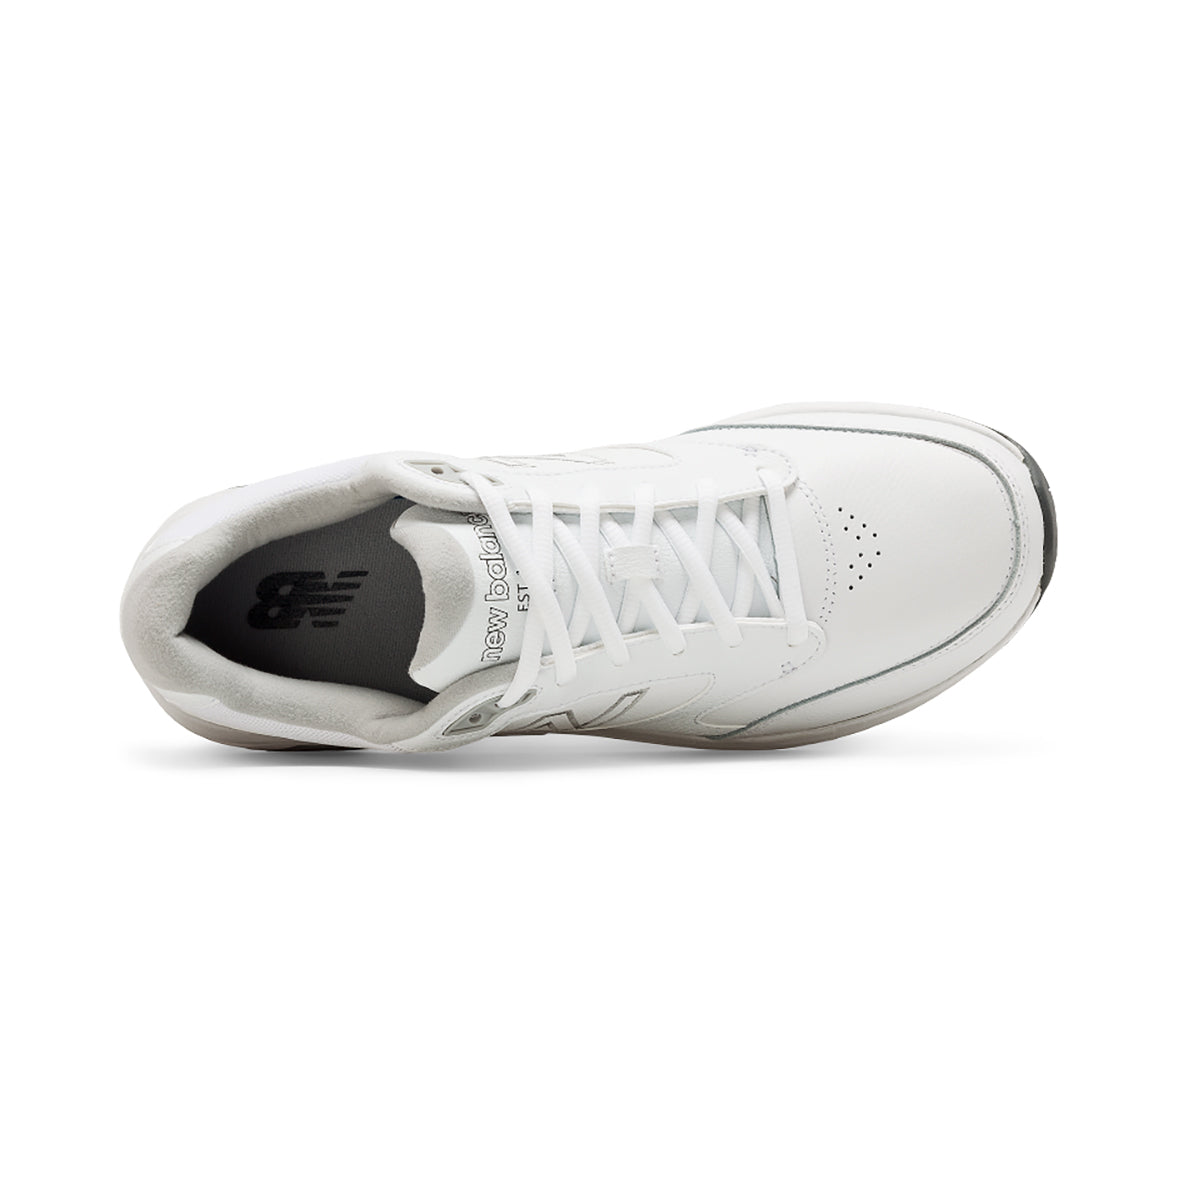 Men's Leather 928v3 Walking Shoes - White - Wide (2E)